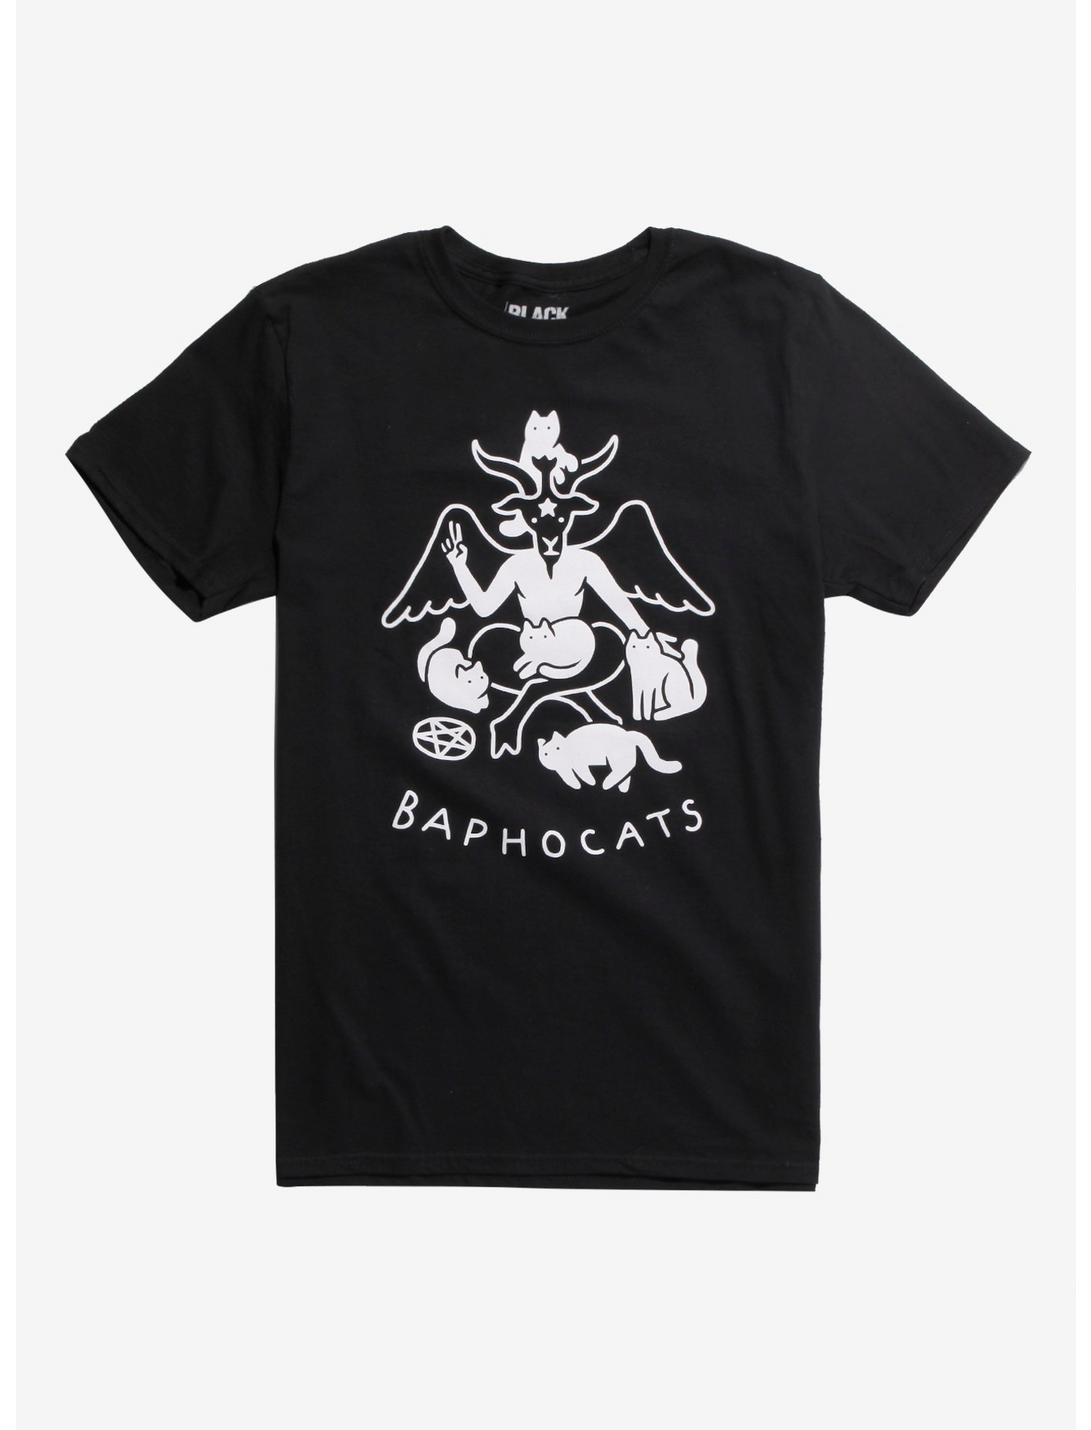 Baphocats Black T-Shirt By Obinsun, WHITE, hi-res